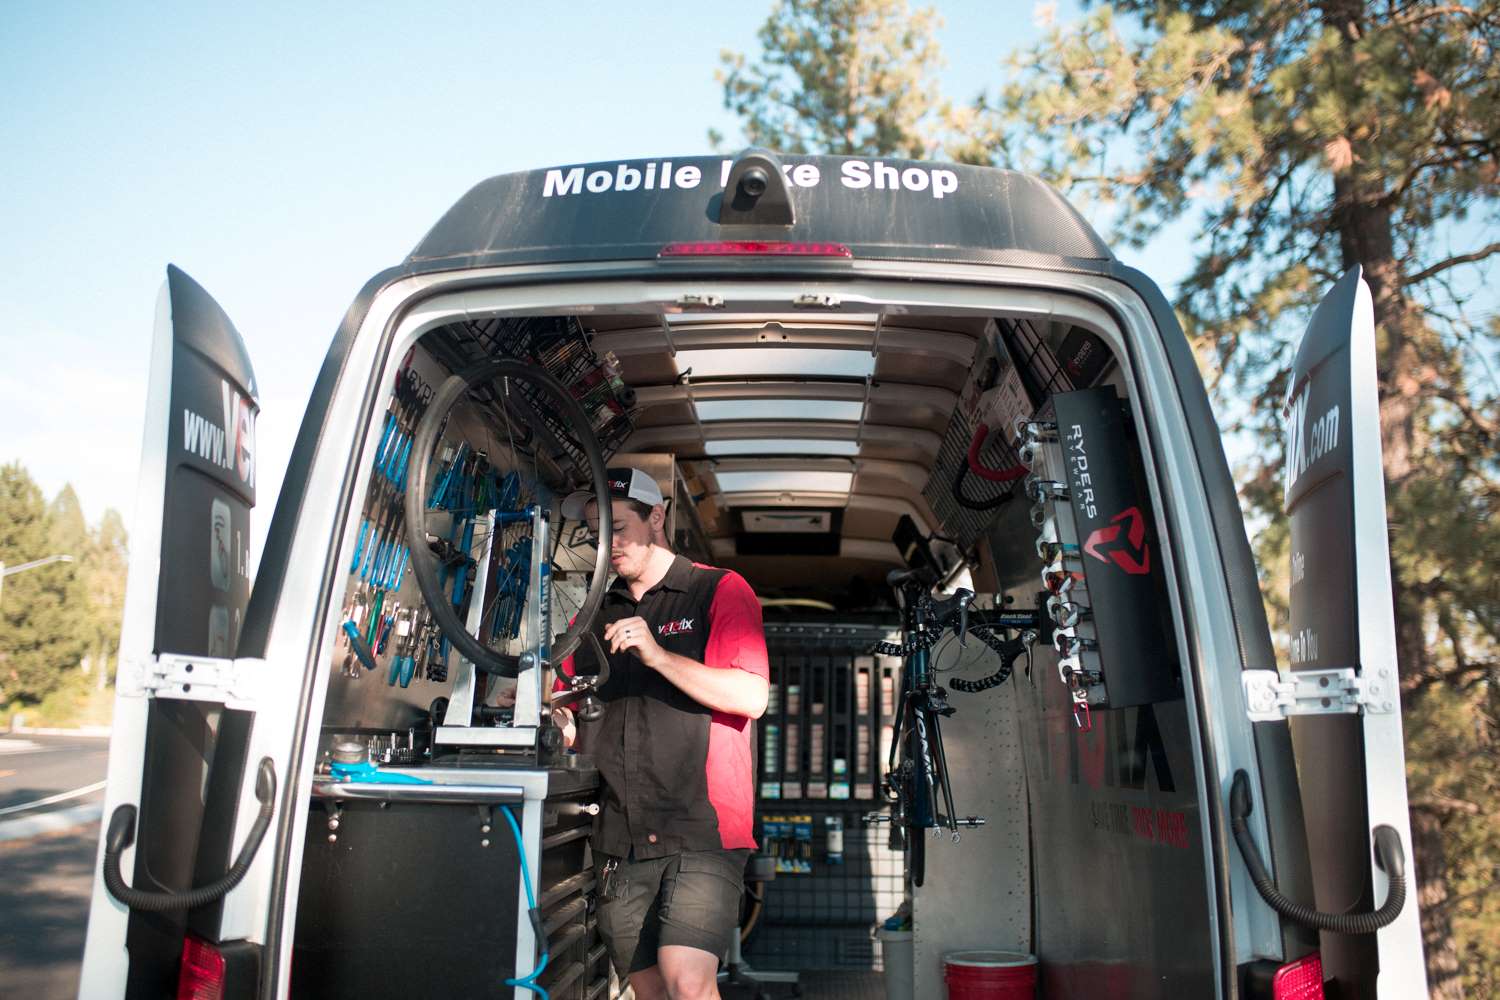 A man fixing a bike in a mobile van bike repair shop.